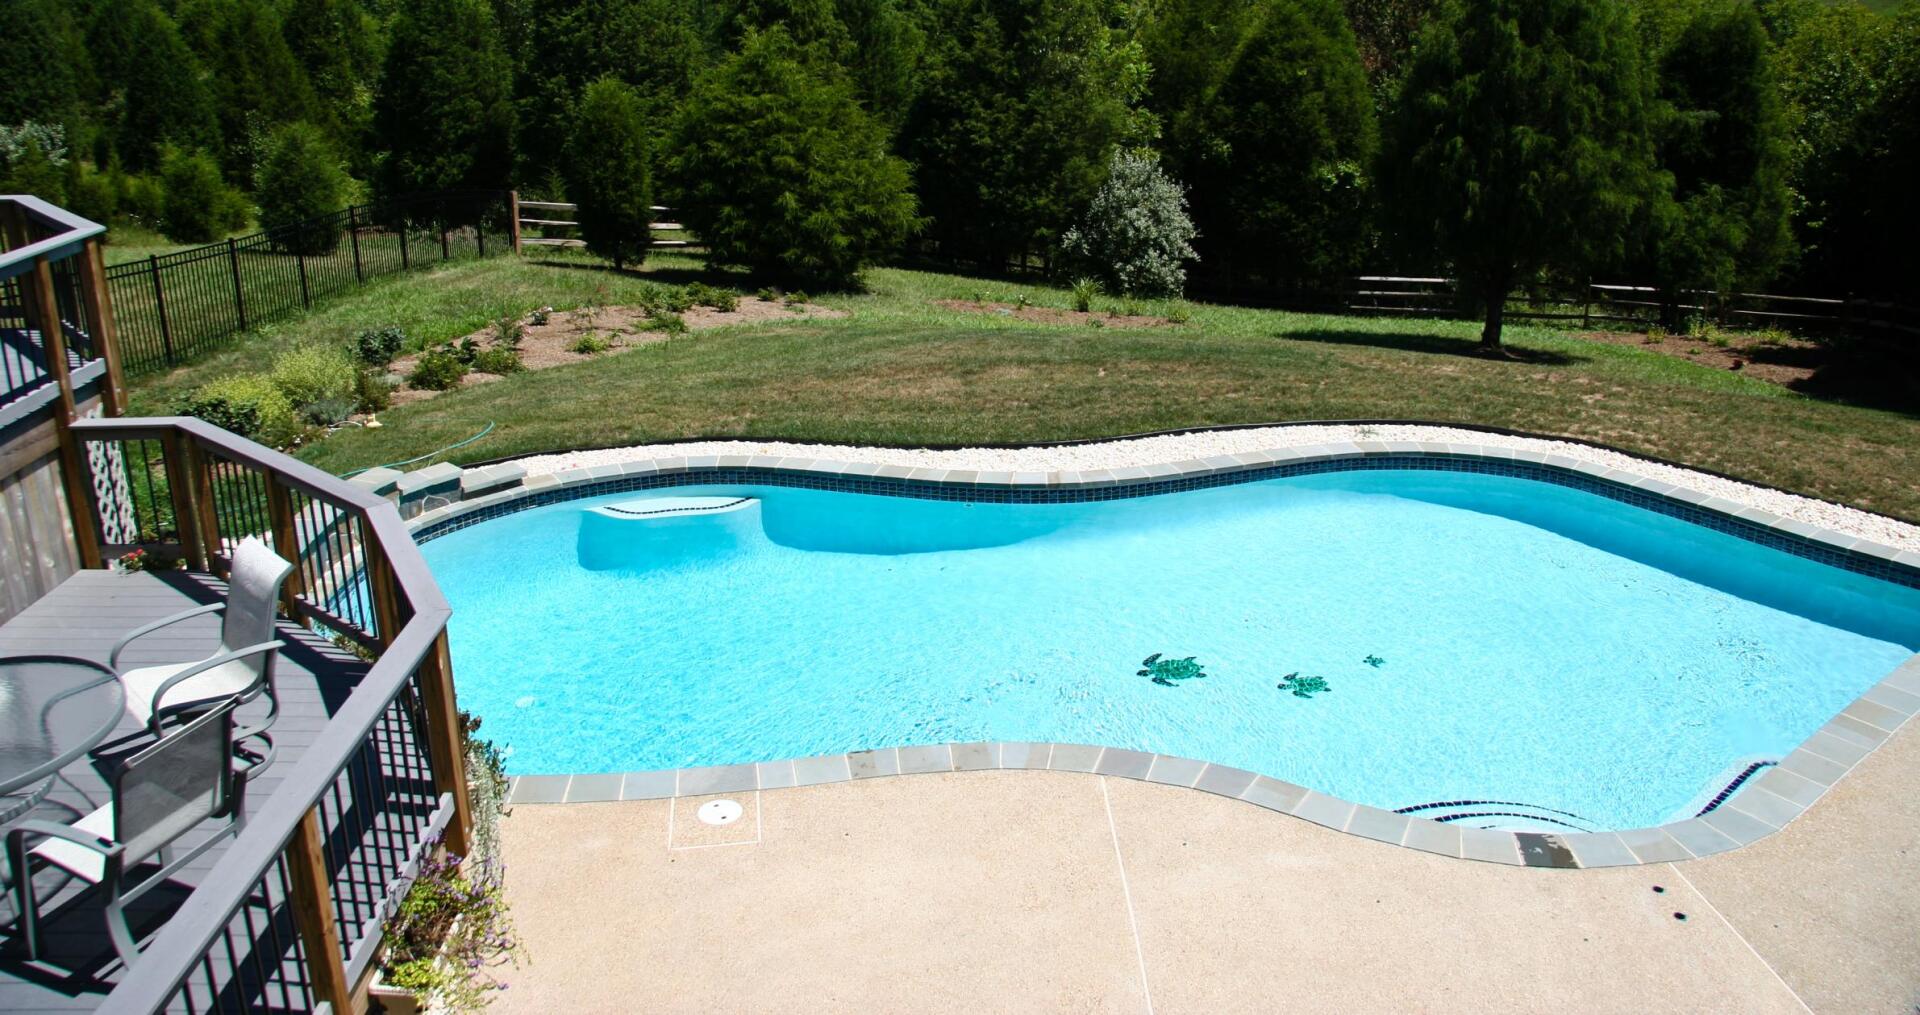 big pool outside the house